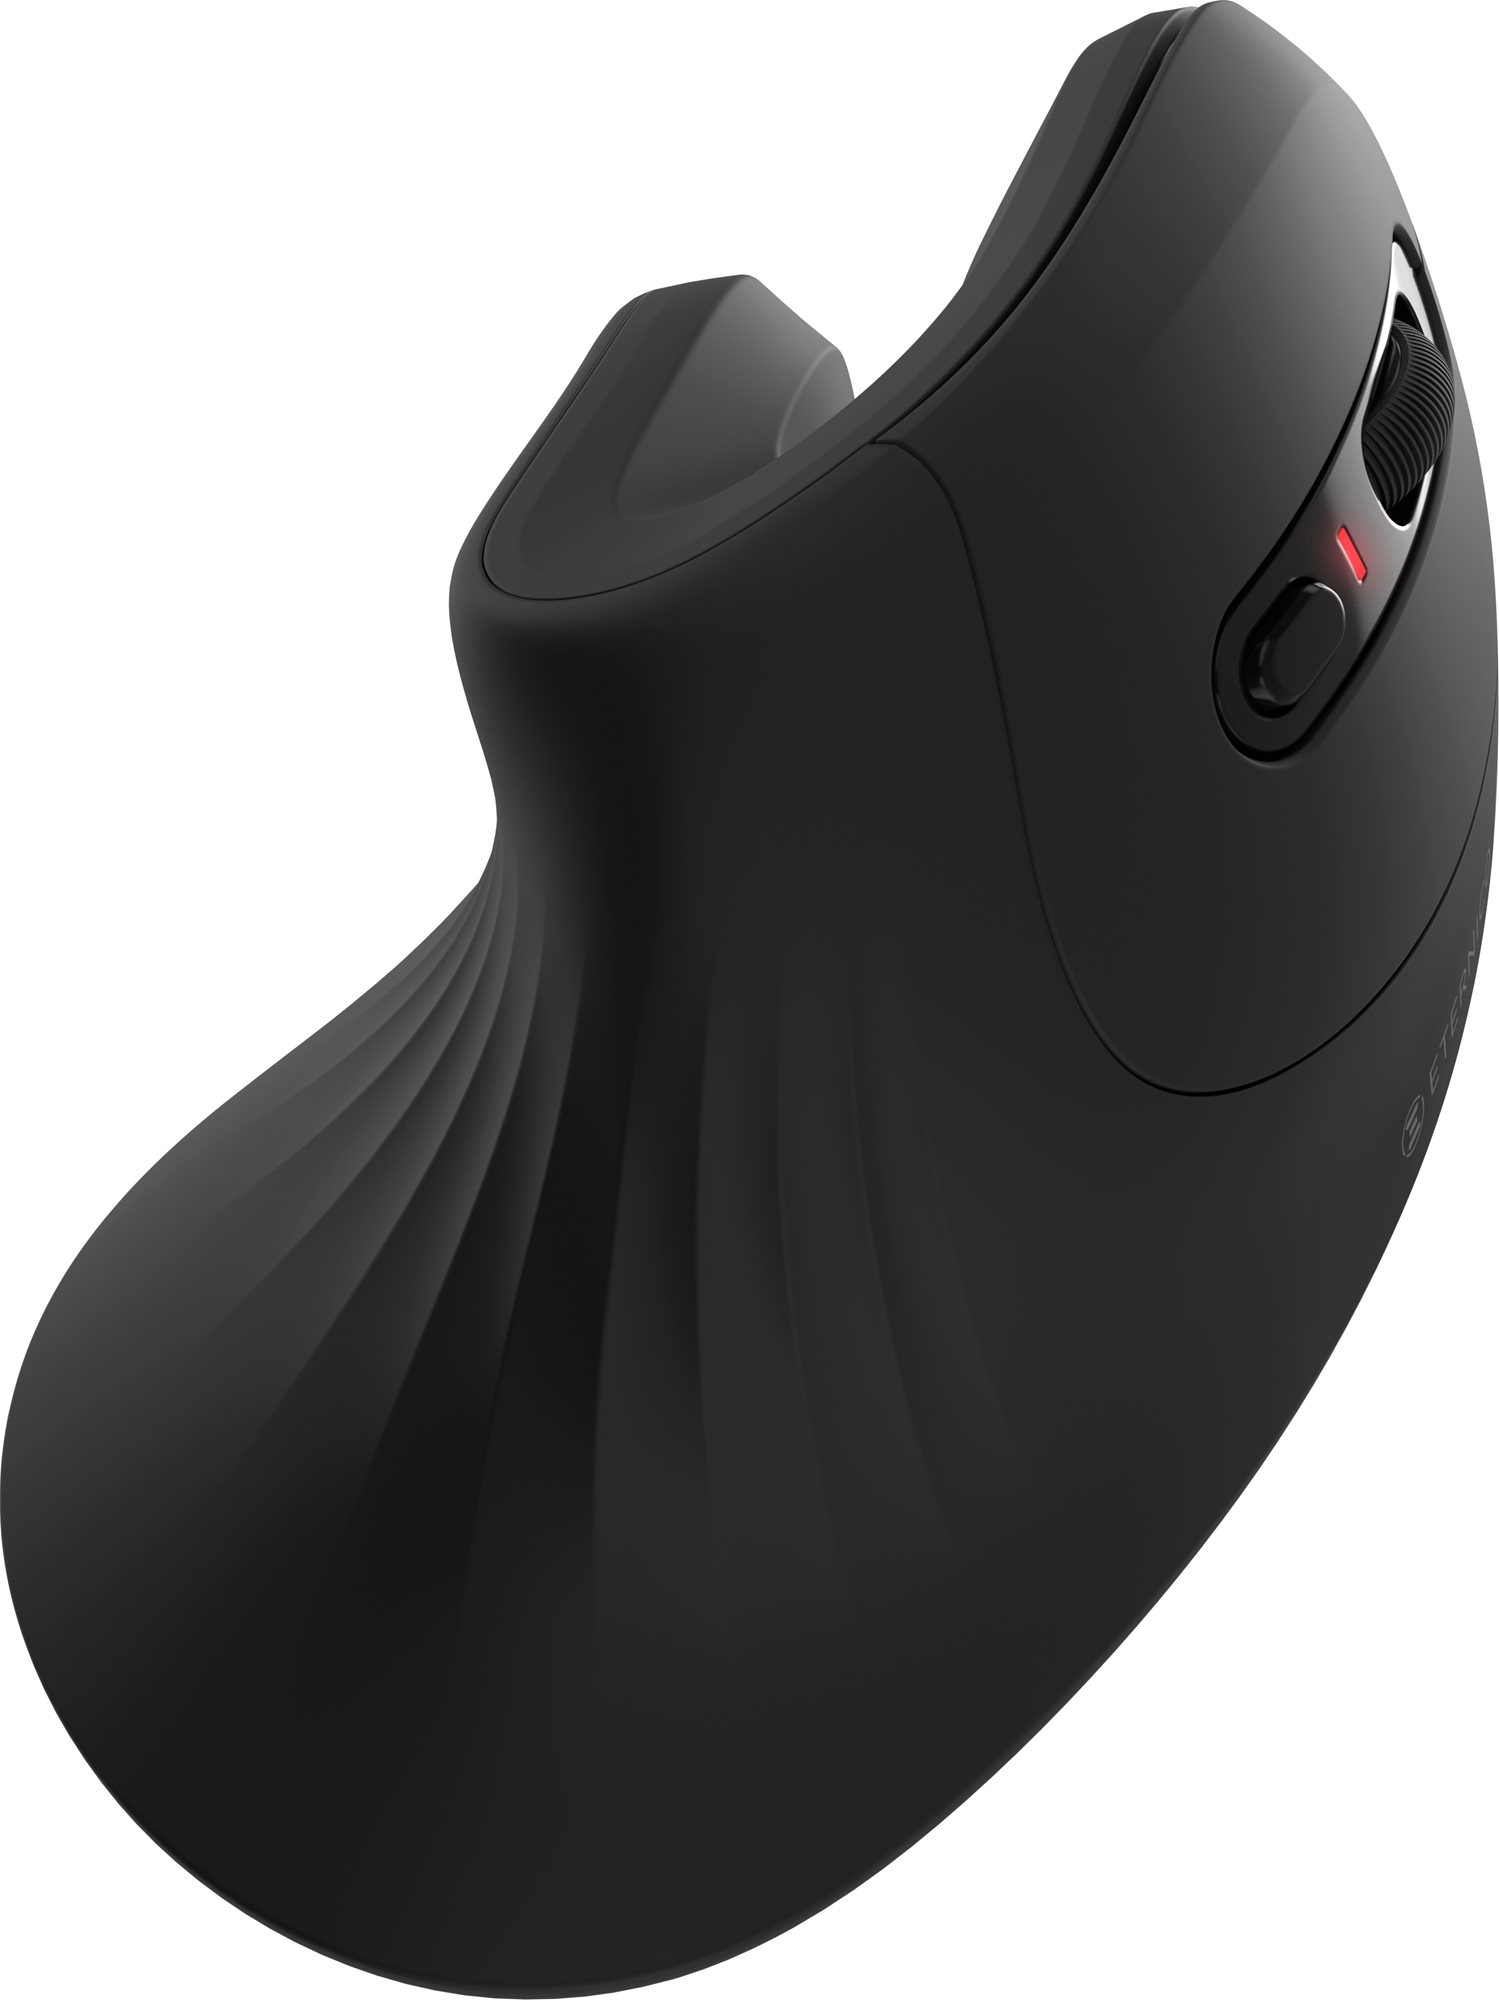 Eternico Office Vertical Mouse MVS390 fekete